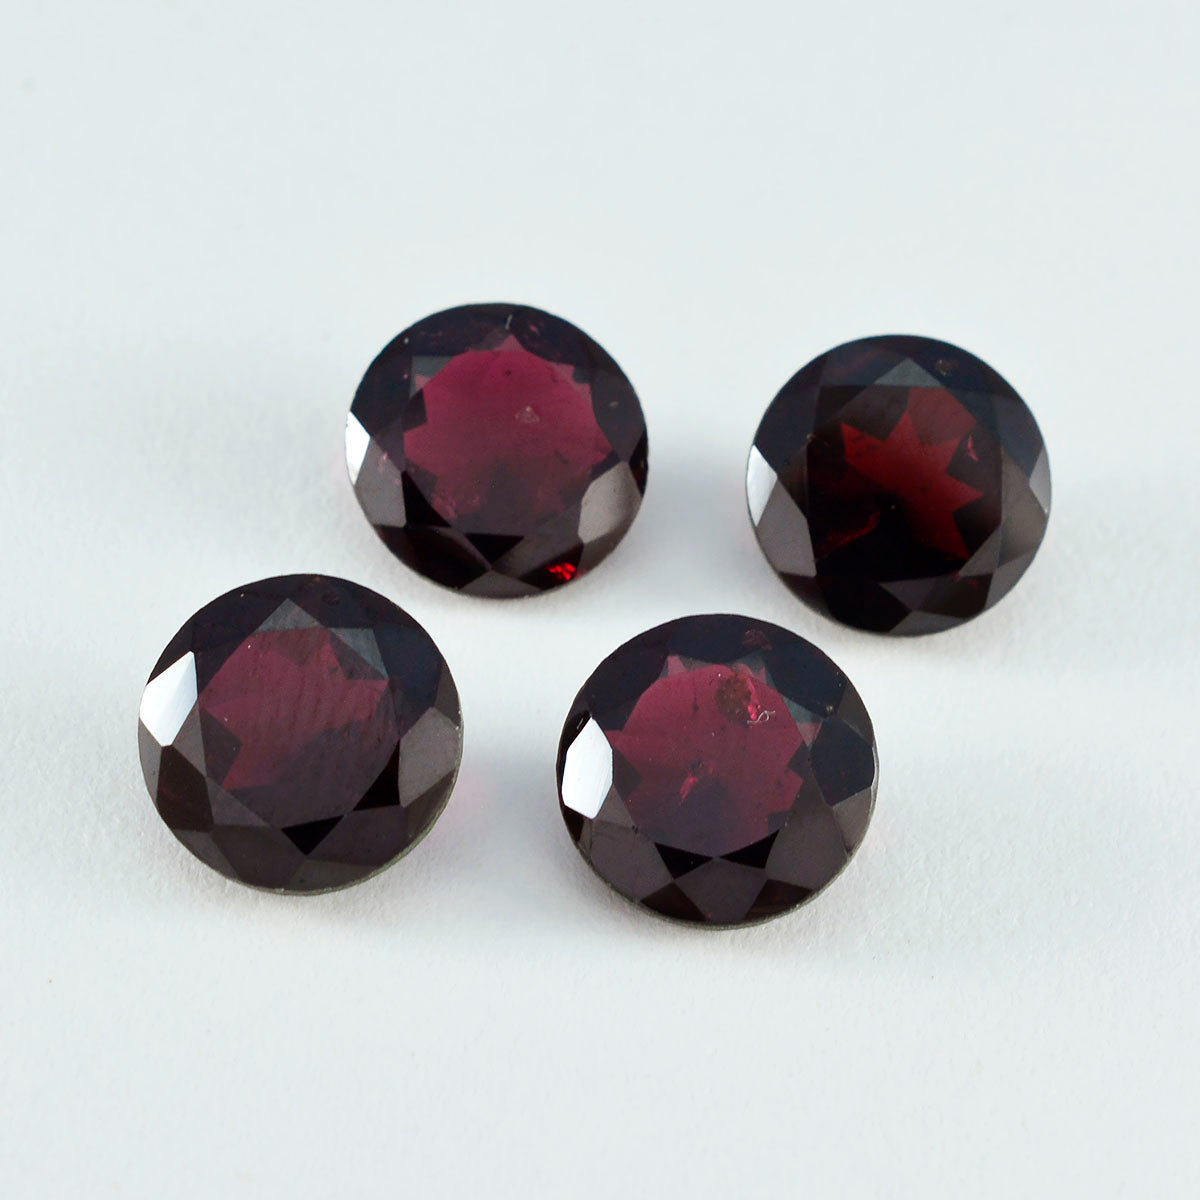 riyogems 1шт натуральный красный гранат ограненный 13х13 мм круглая форма а+ качество сыпучий драгоценный камень